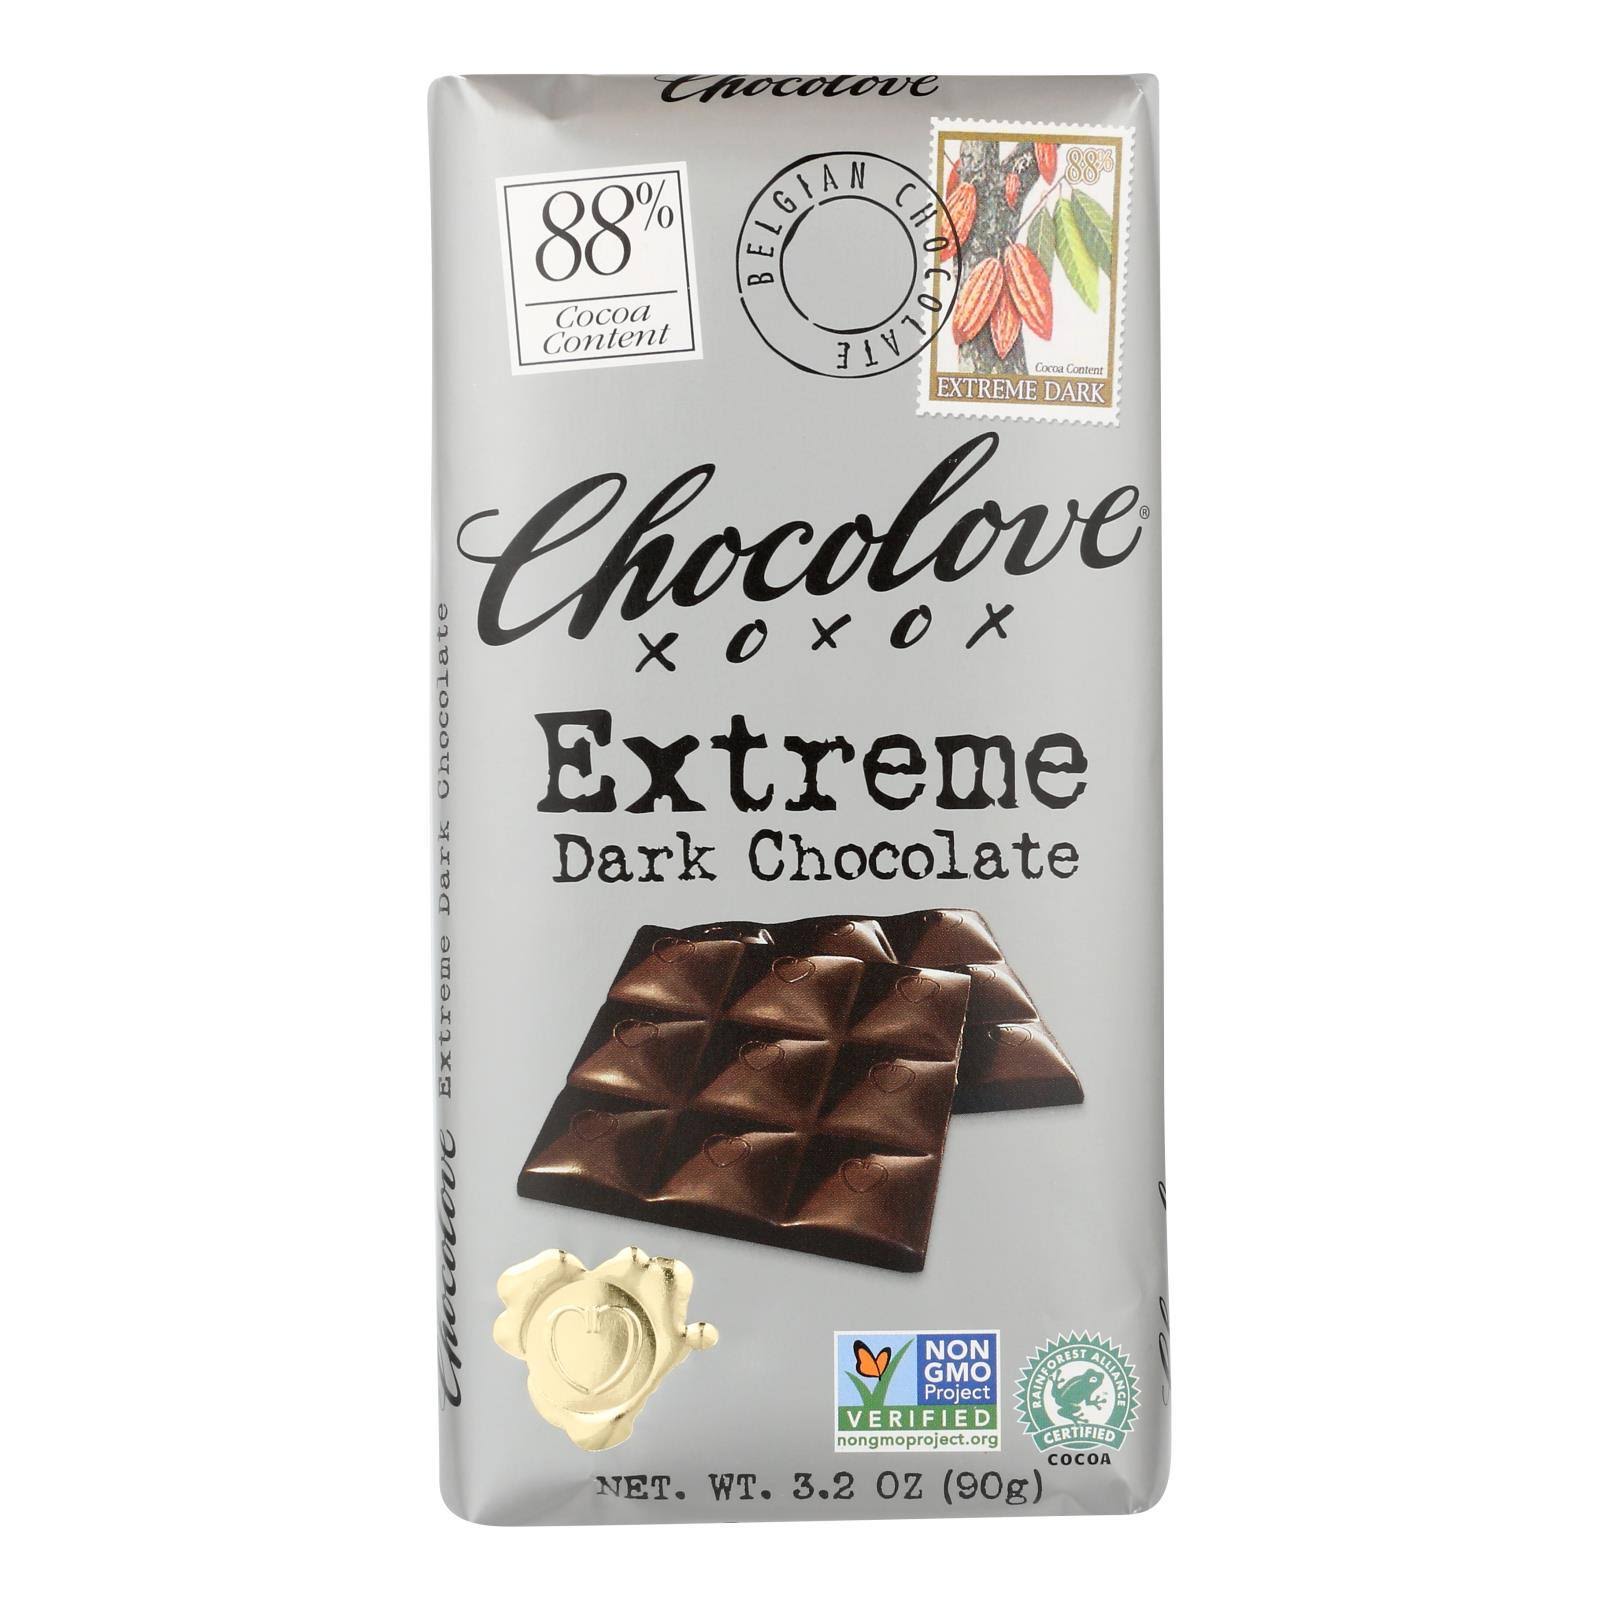 Chocolove: Extreme Dark Chocolate Bar, 3.2 oz